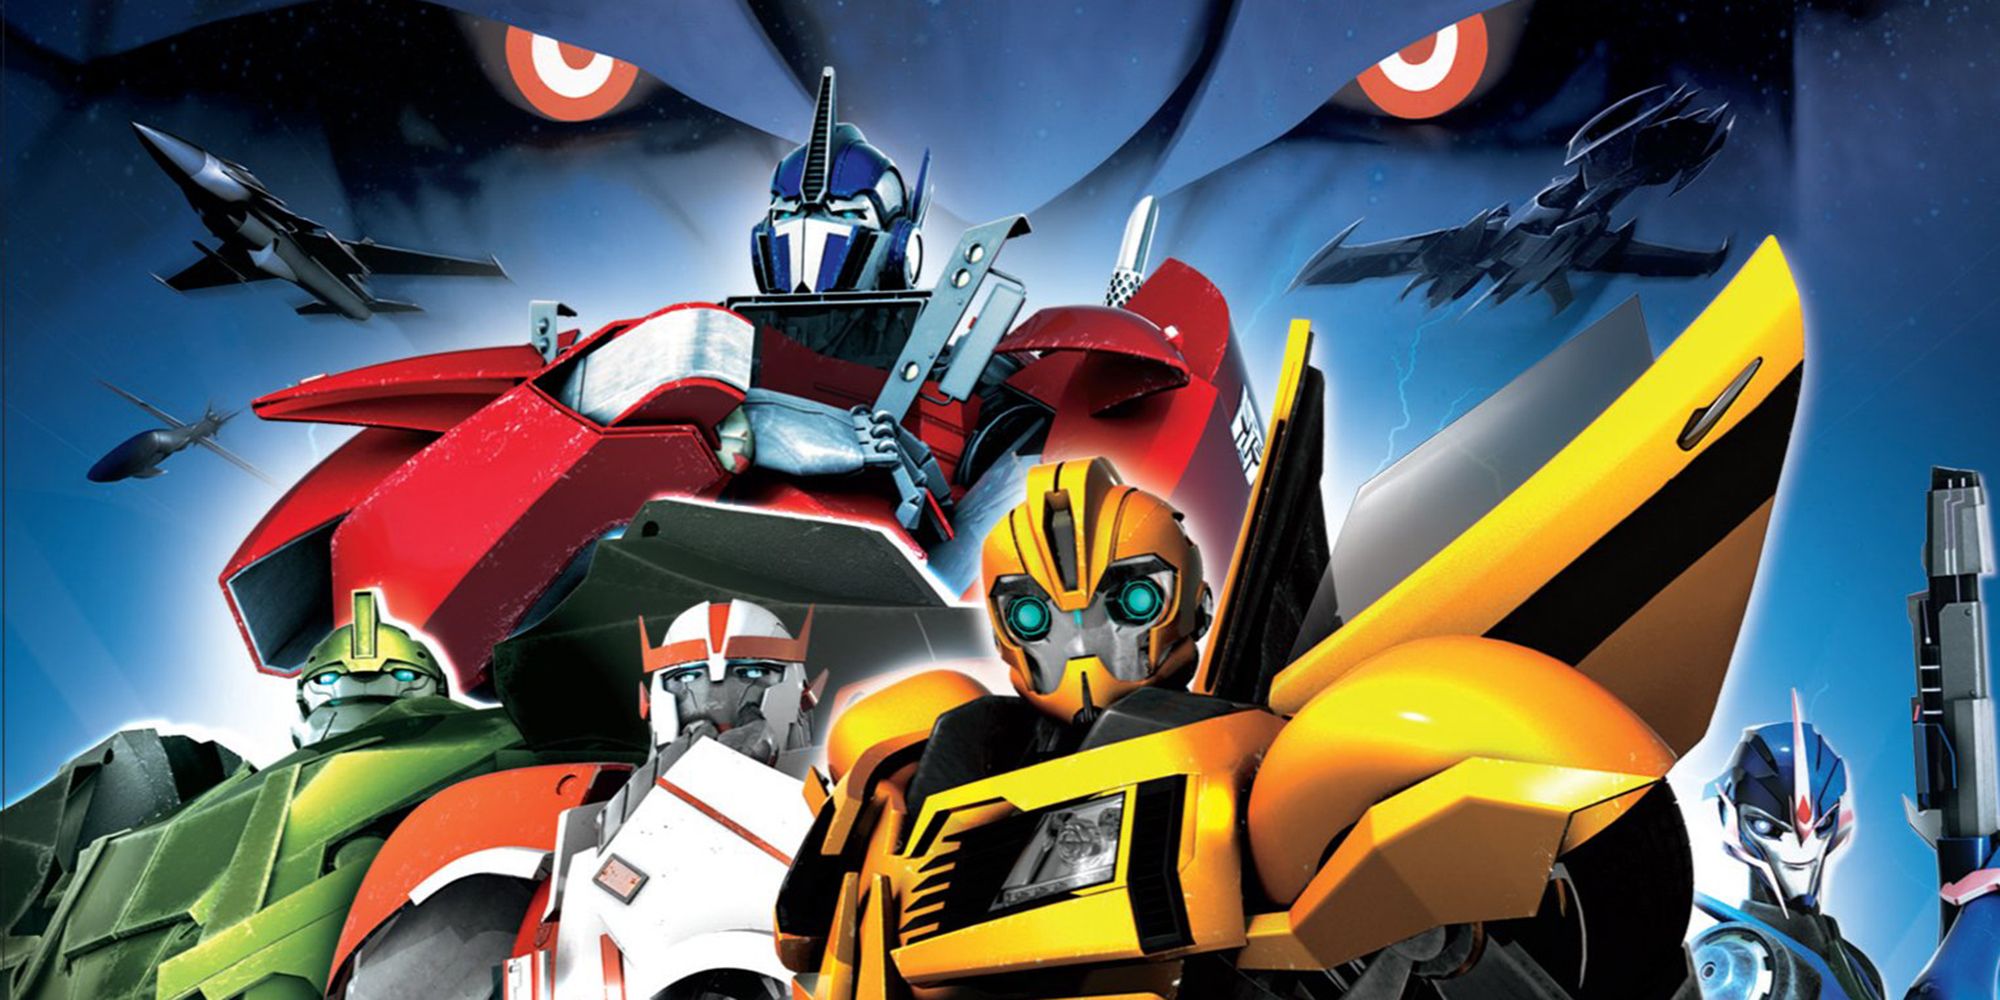 Transformers Prime: Ultimate Bumblebee